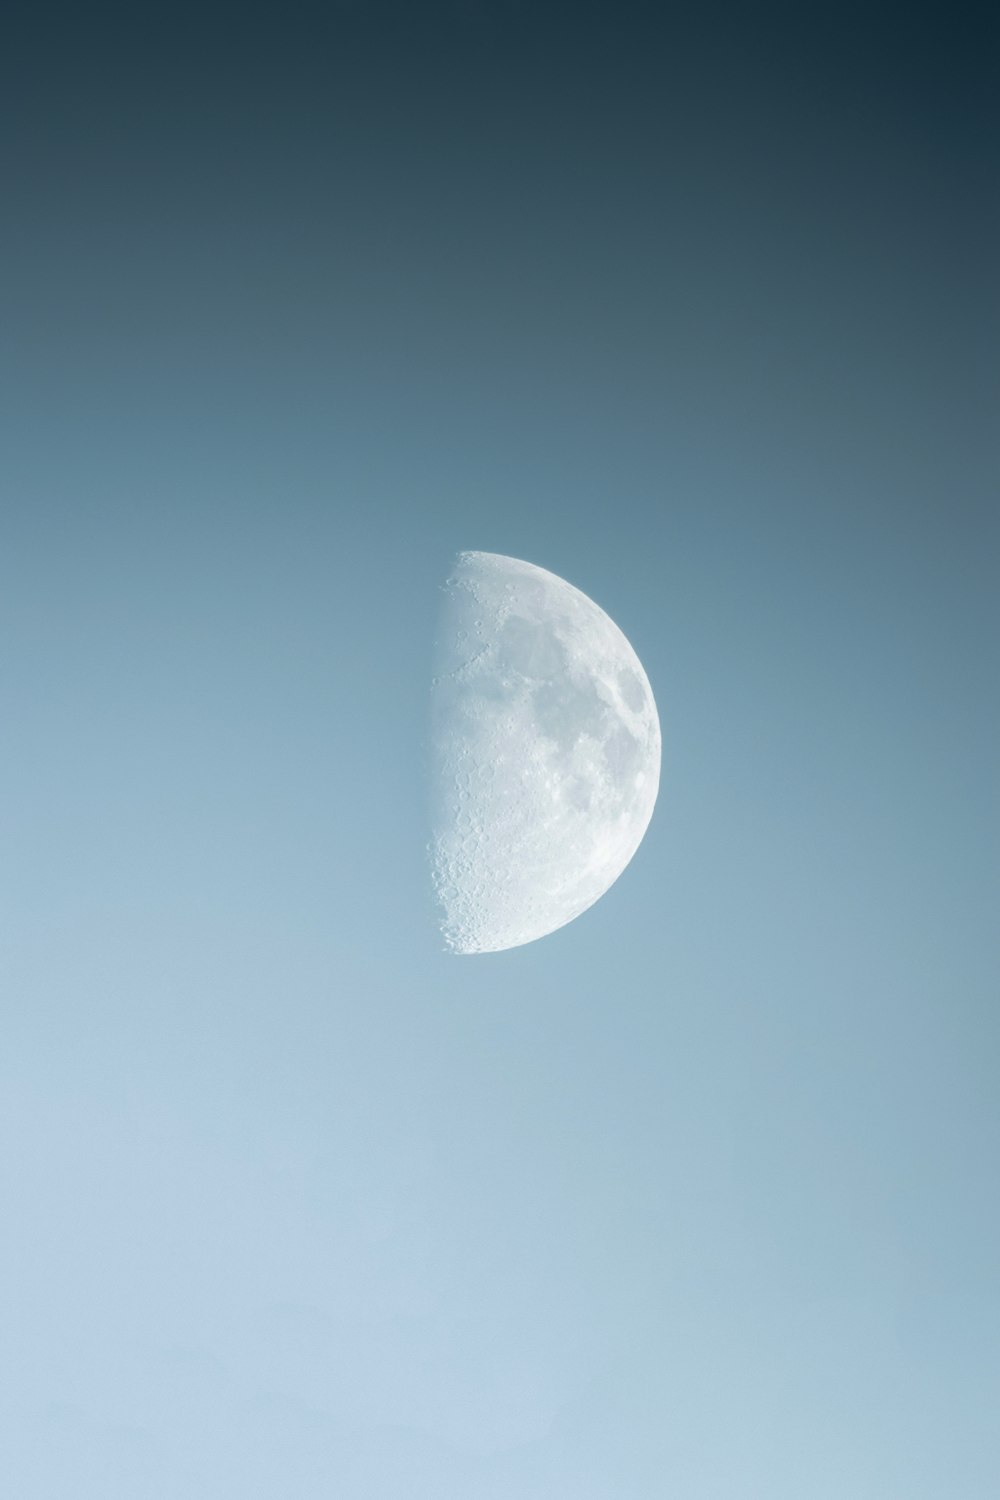 a half moon is seen in the sky